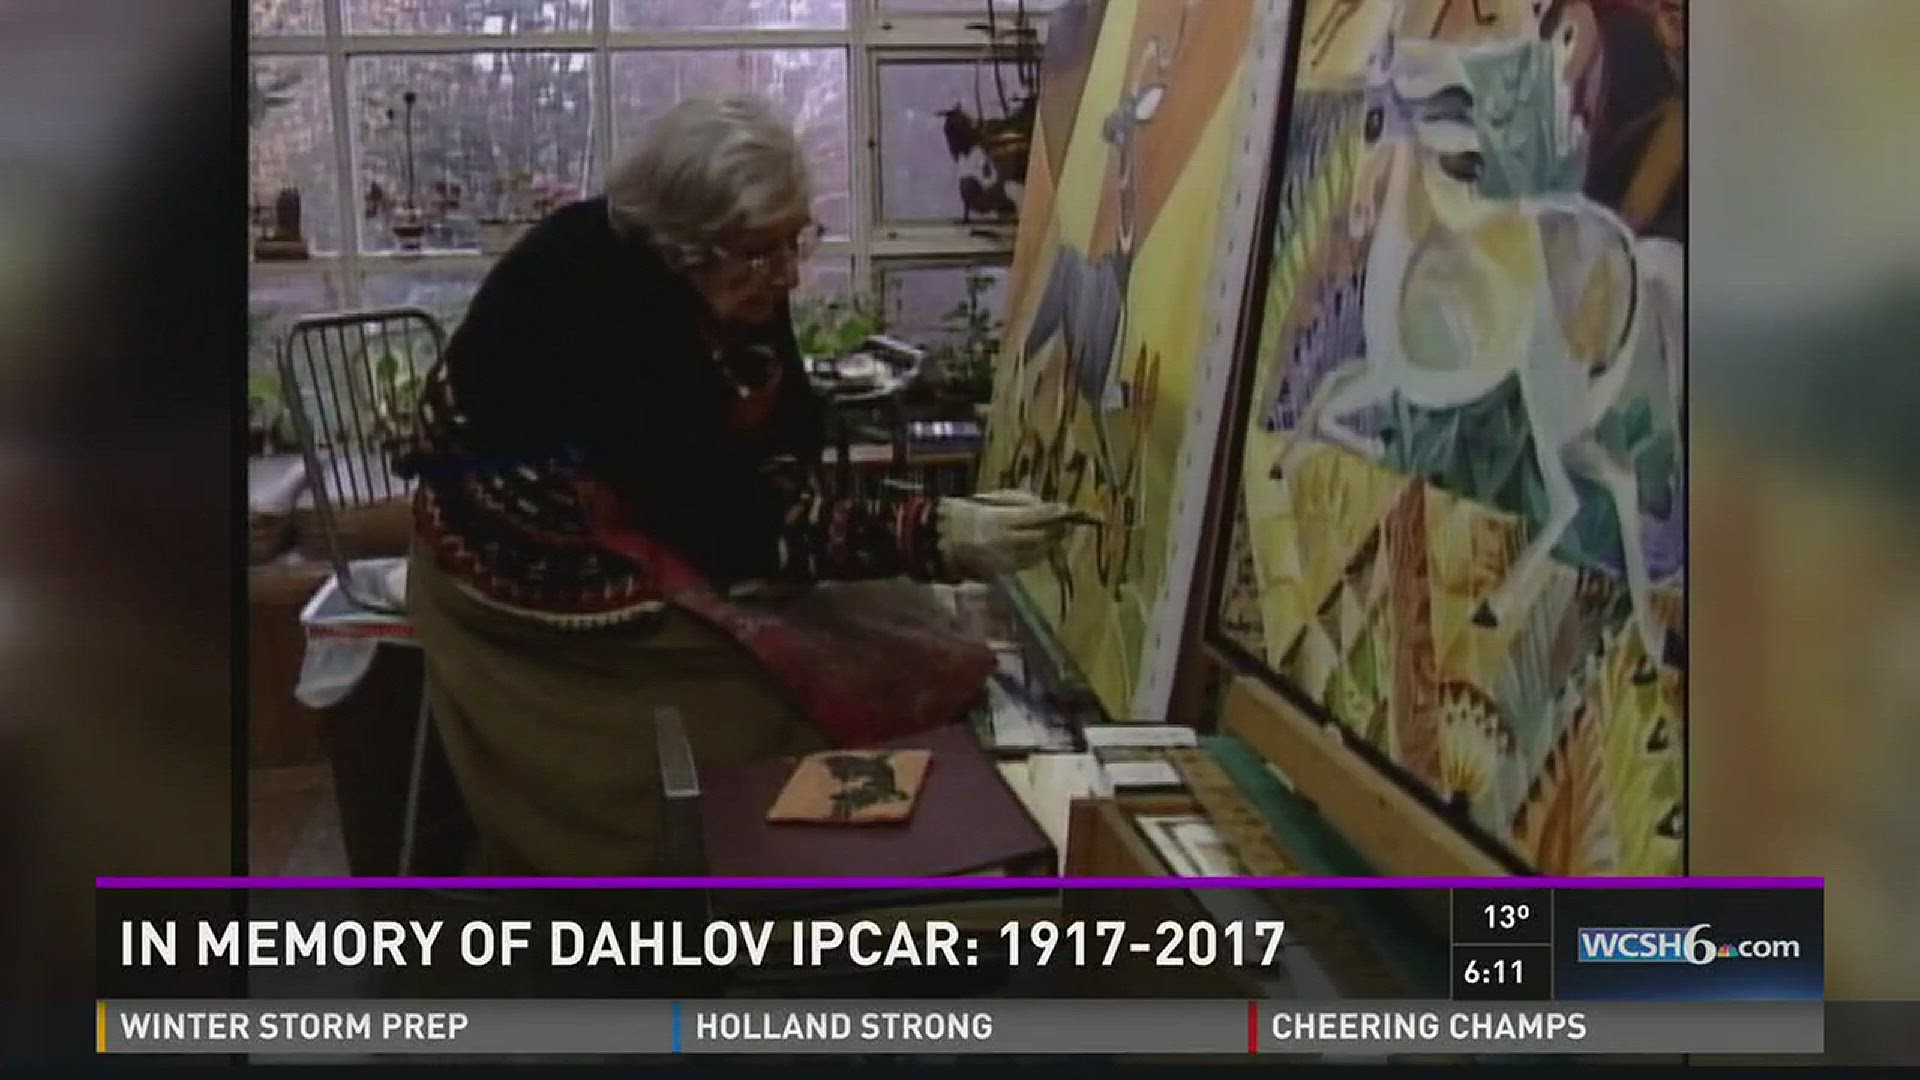 In memory of Dahlov Ipcar